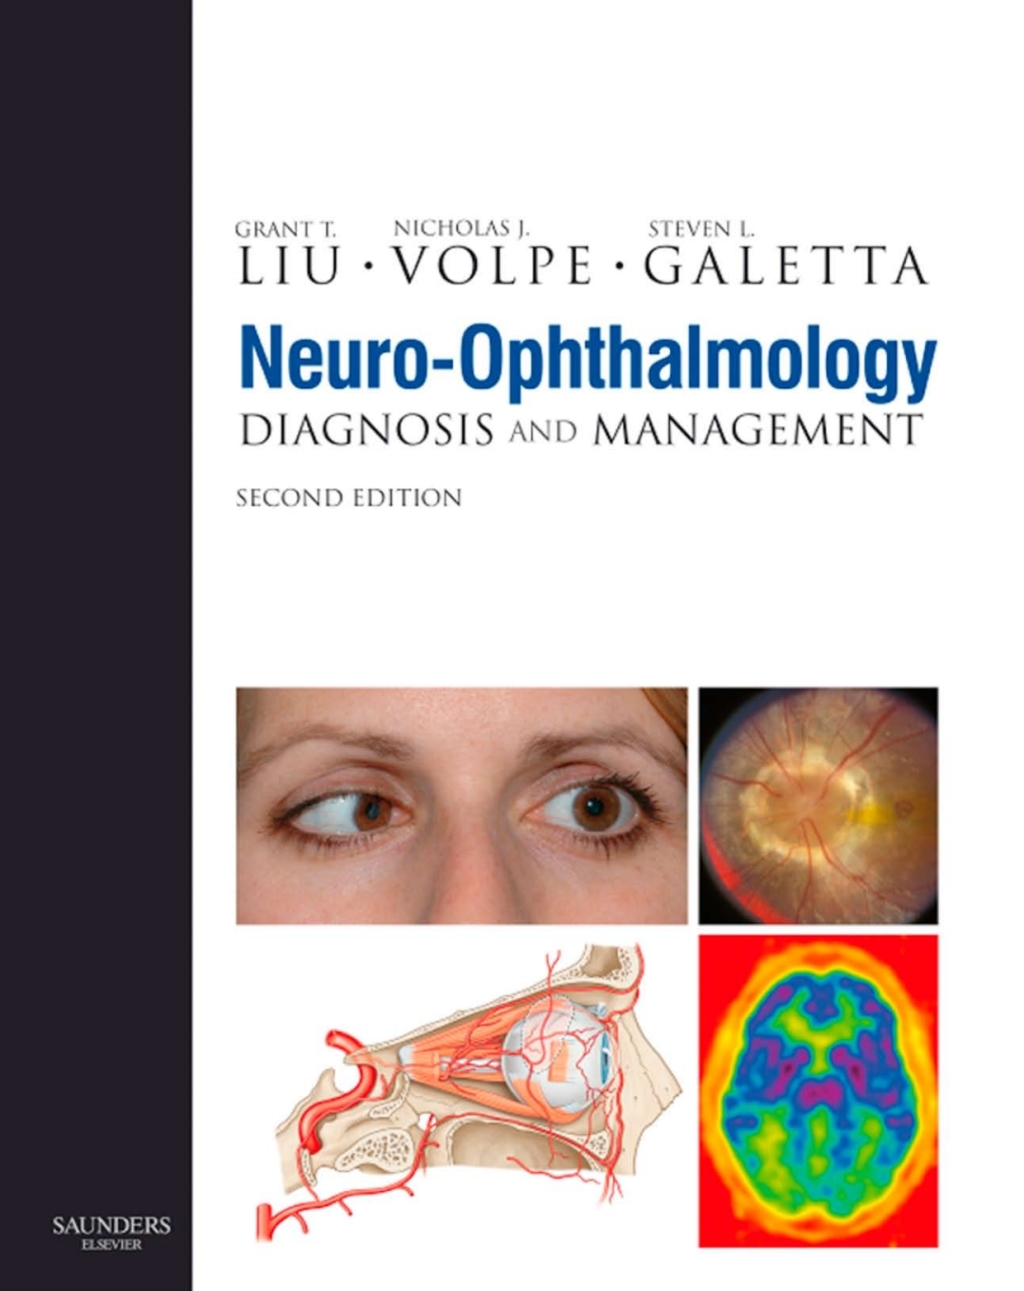 Neuro-Ophthalmology E-Book (eBook) - Grant T. Liu; Nicholas J. Volpe; Steven L. Galetta